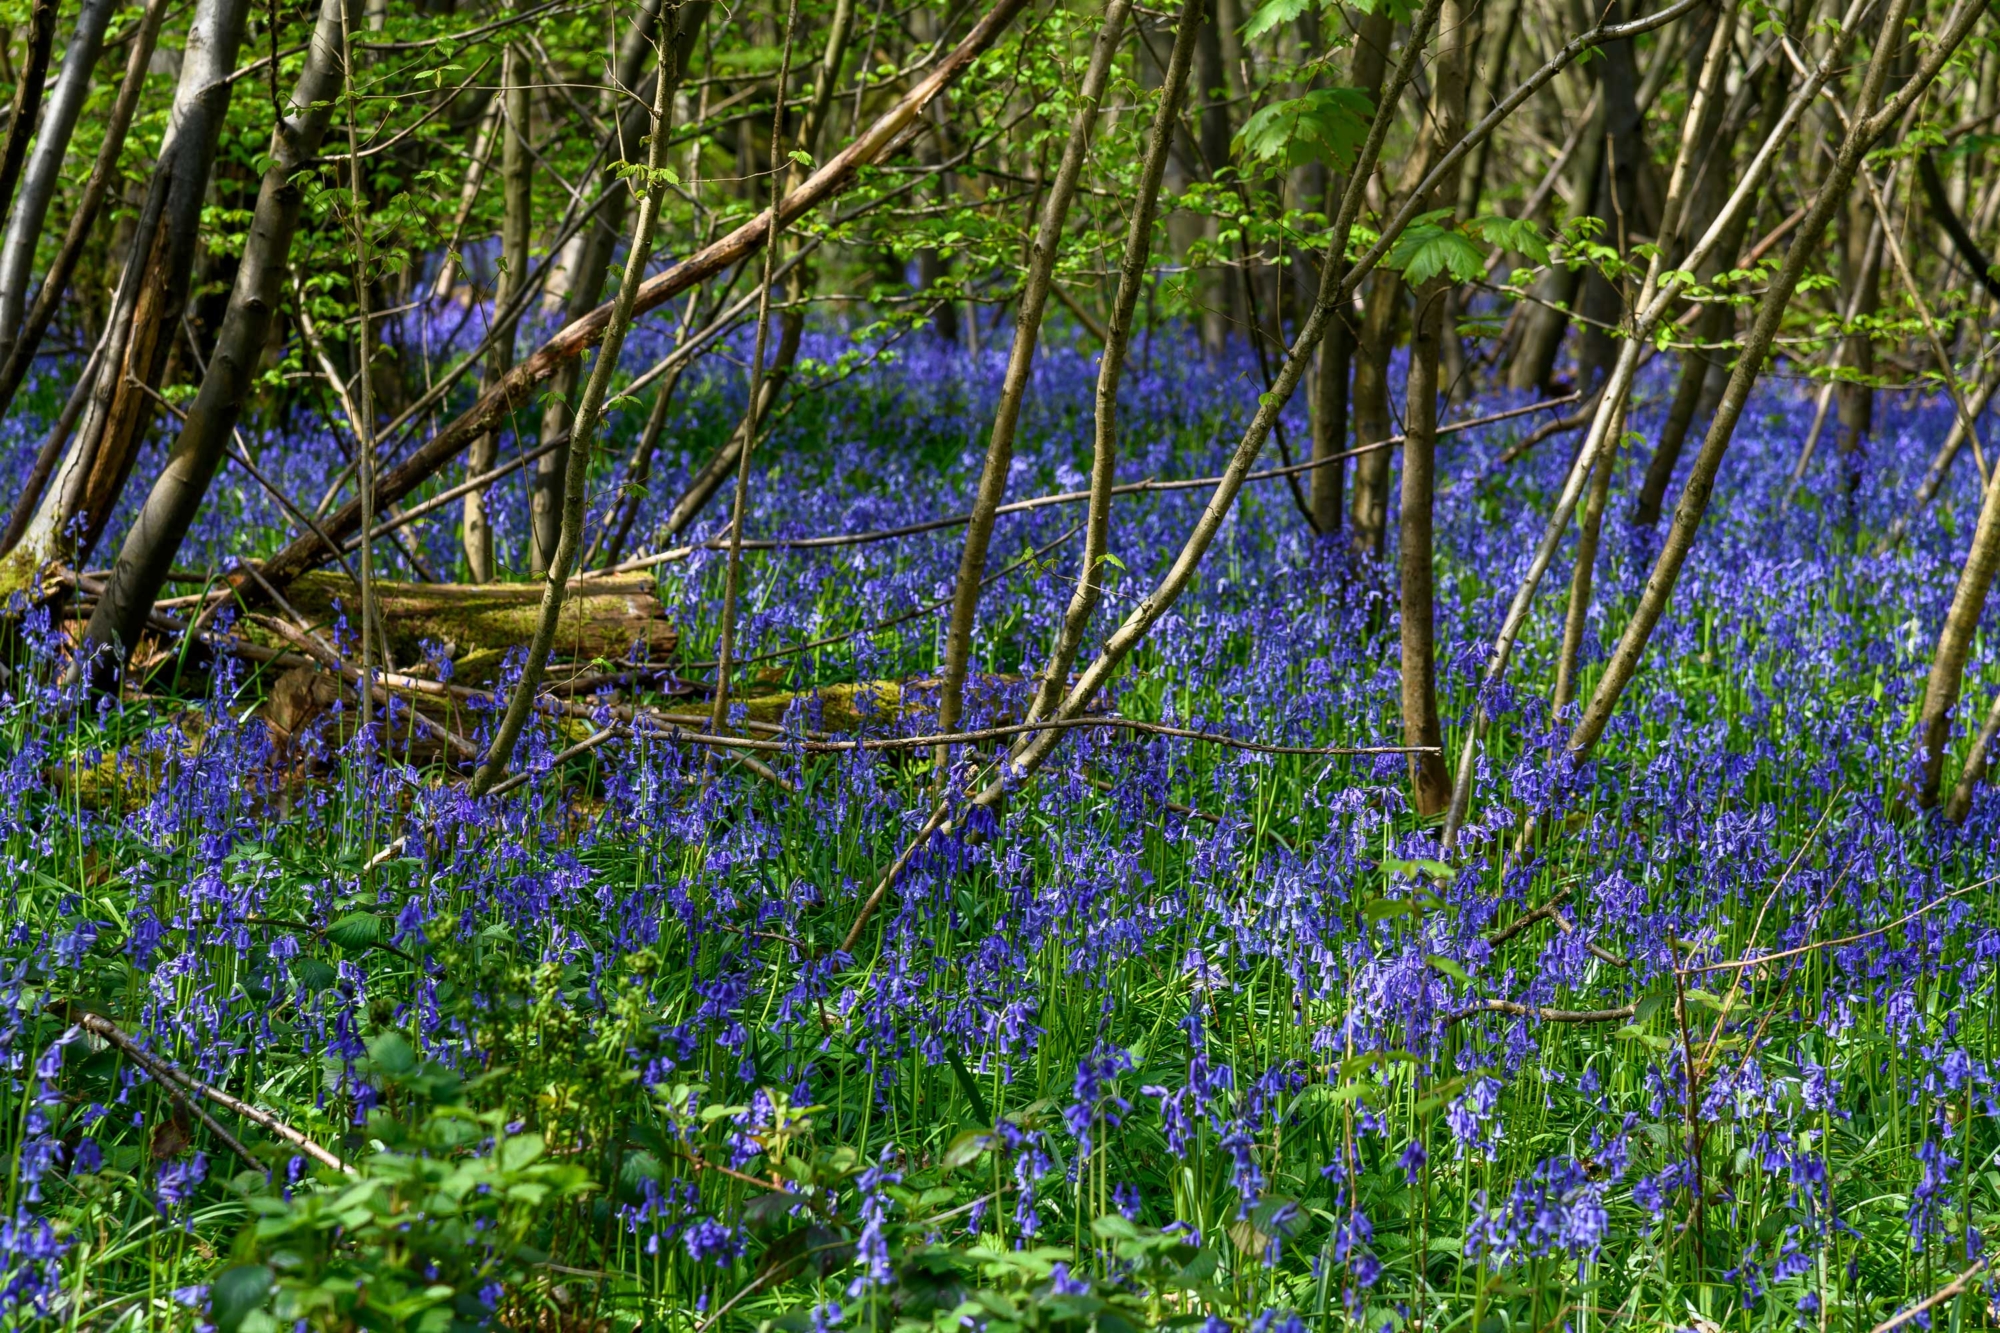 Bluebell Wood in Trosley Country Park near Gravesend, Kent